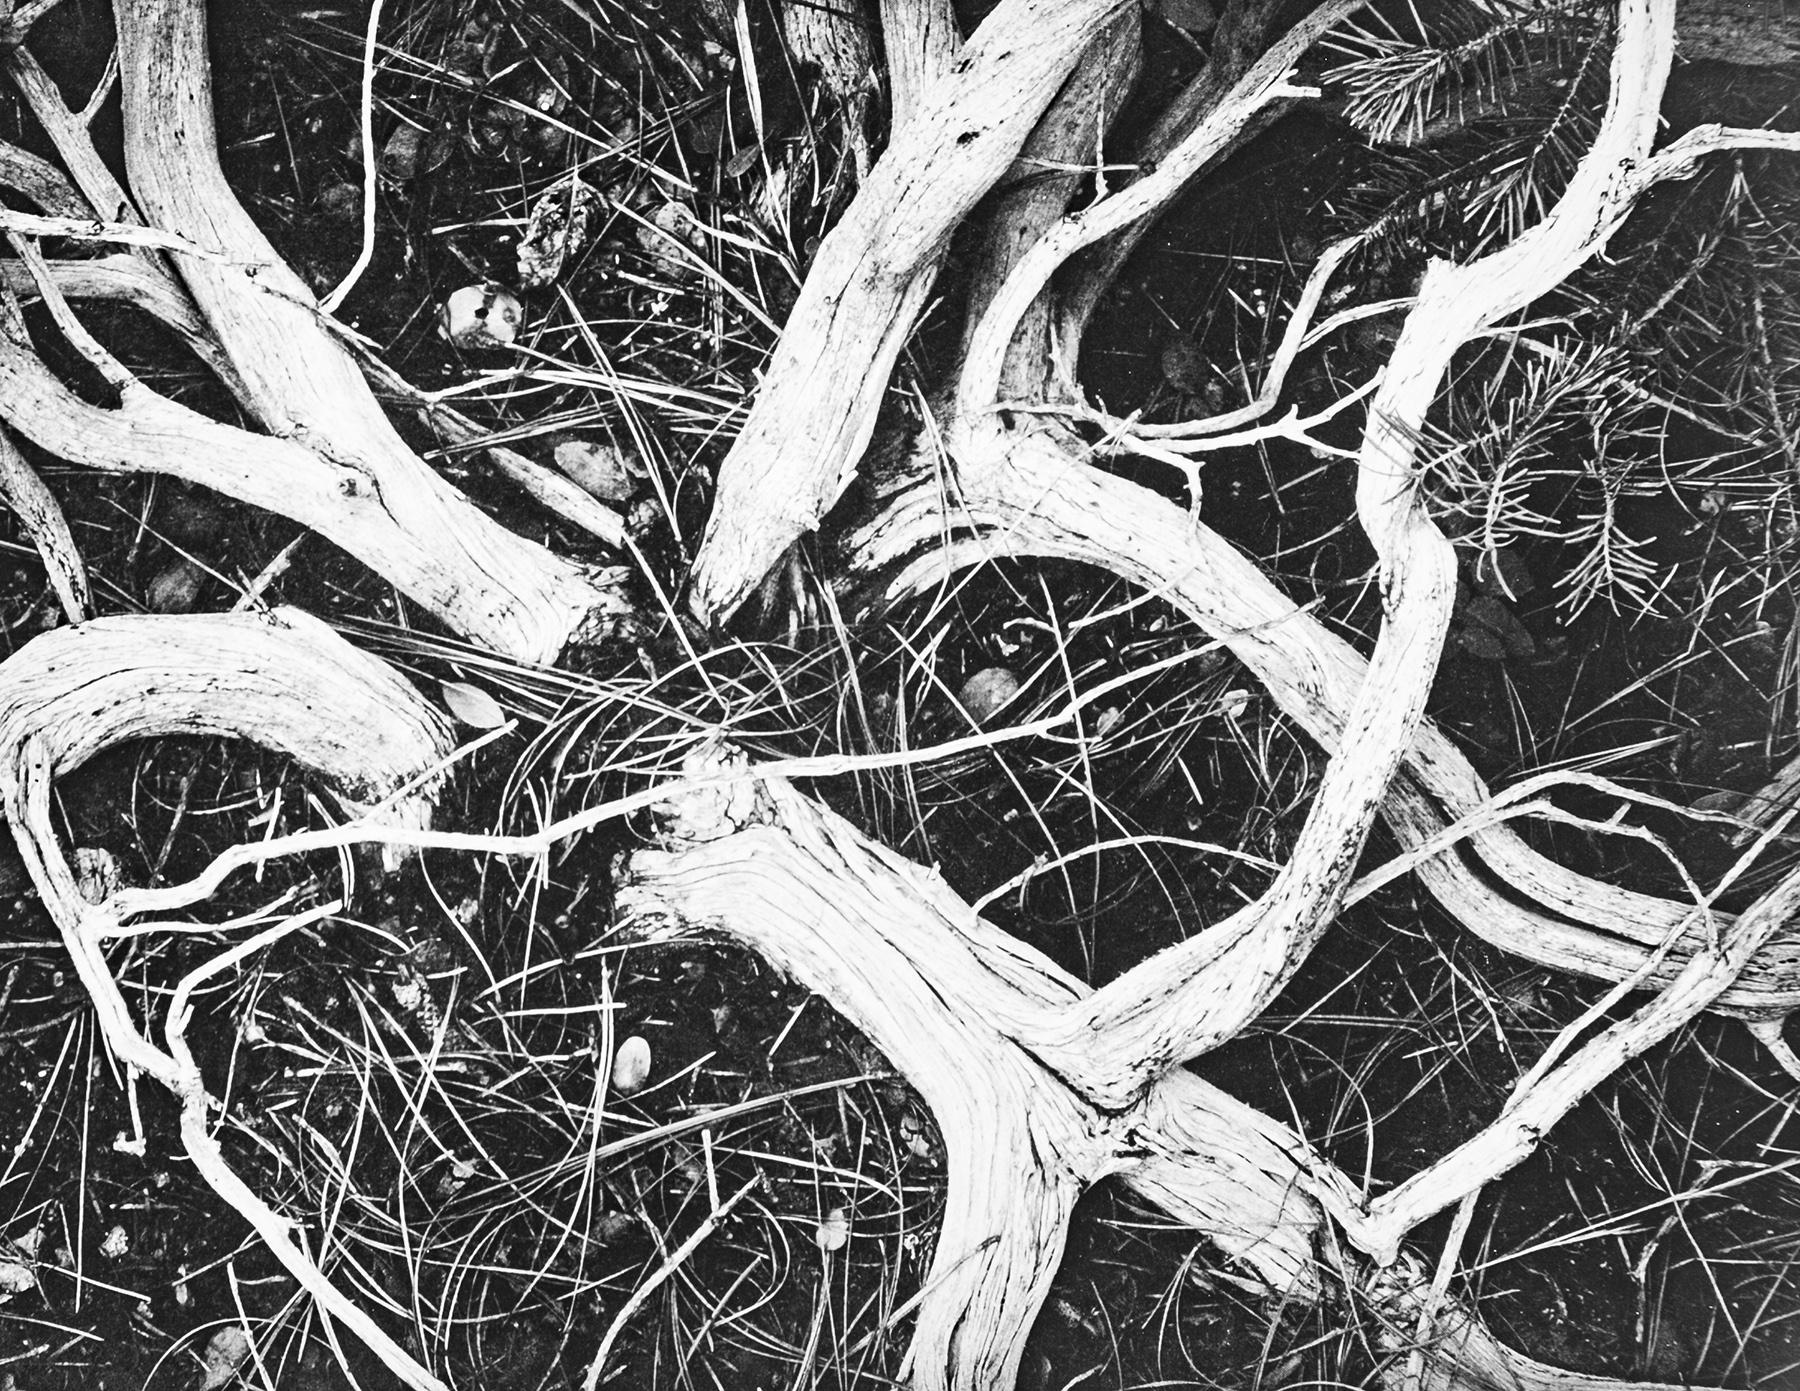 Manzanita Twigs in Kings River Sierra, a Photograph by Ansel Adams